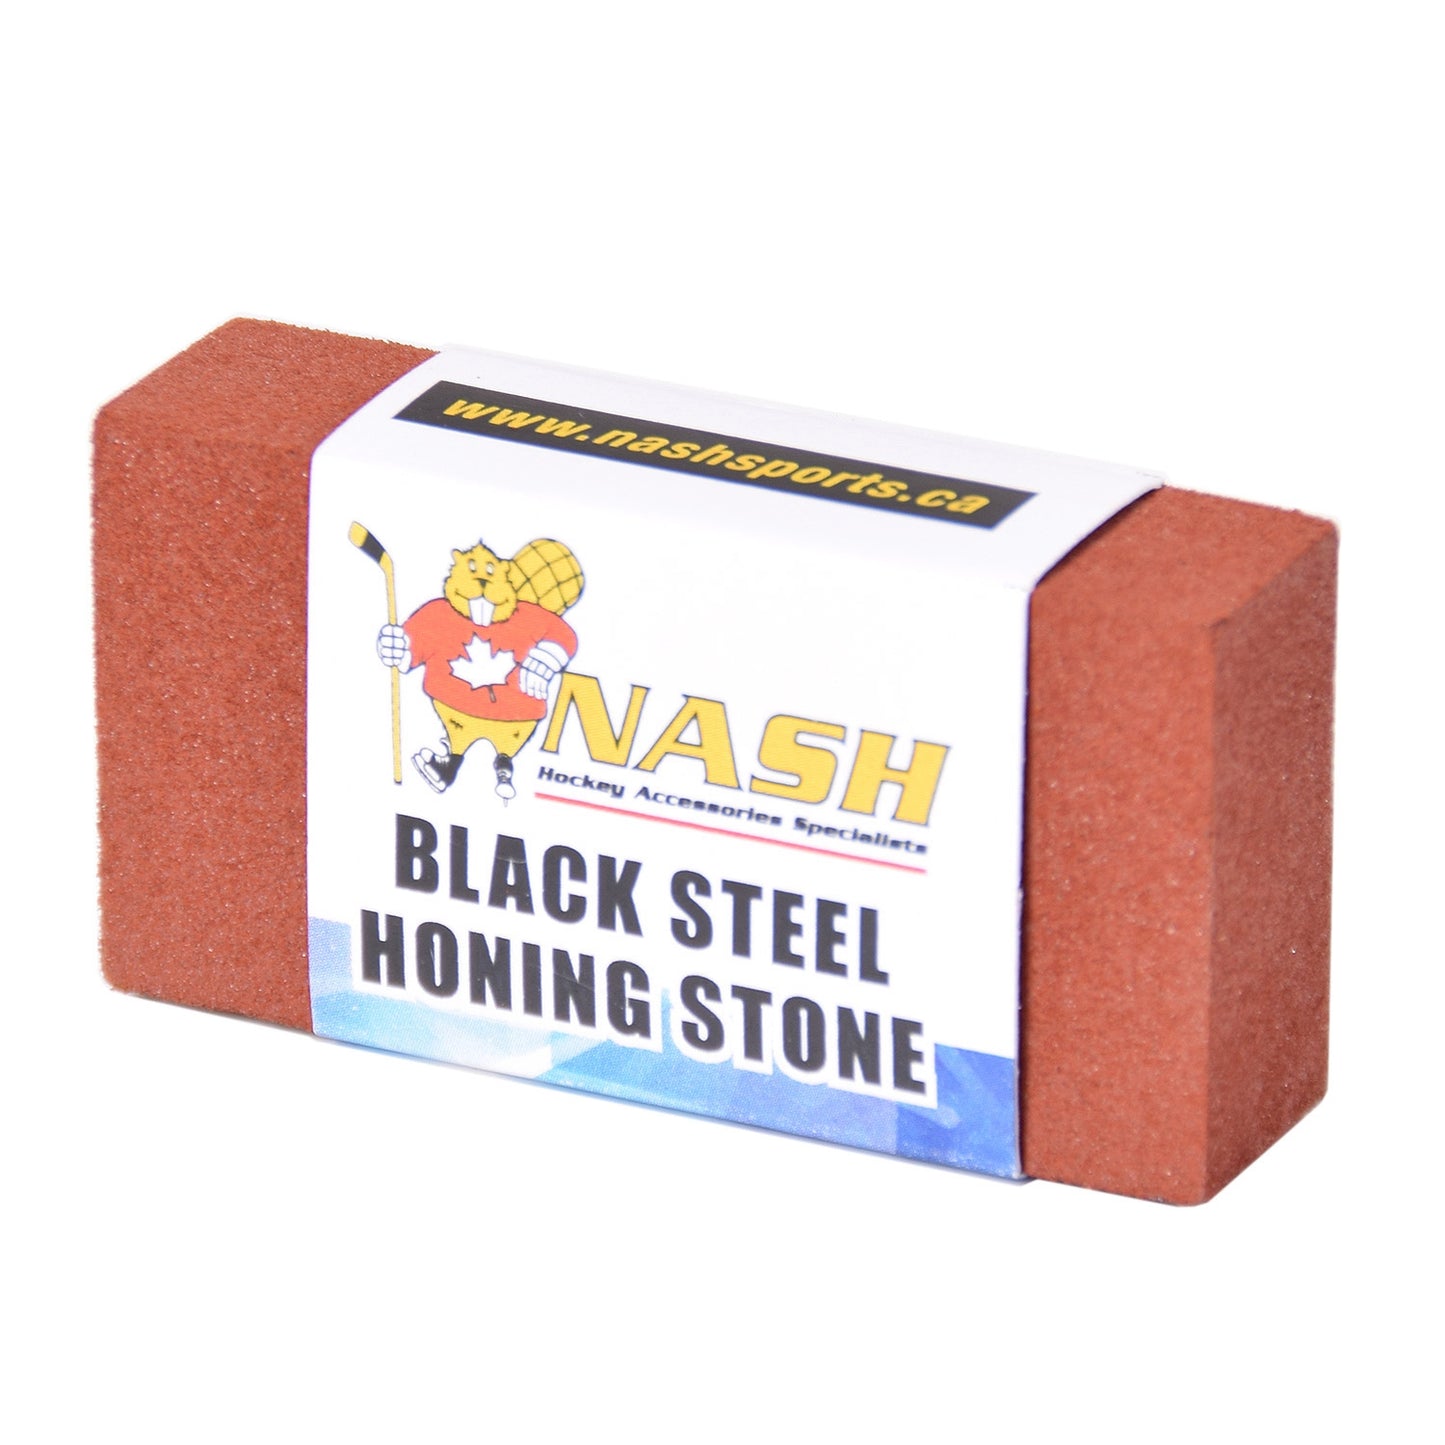 Sharpening Stone Ice Skates BlackSteel Iron Nash Sharpening Stone